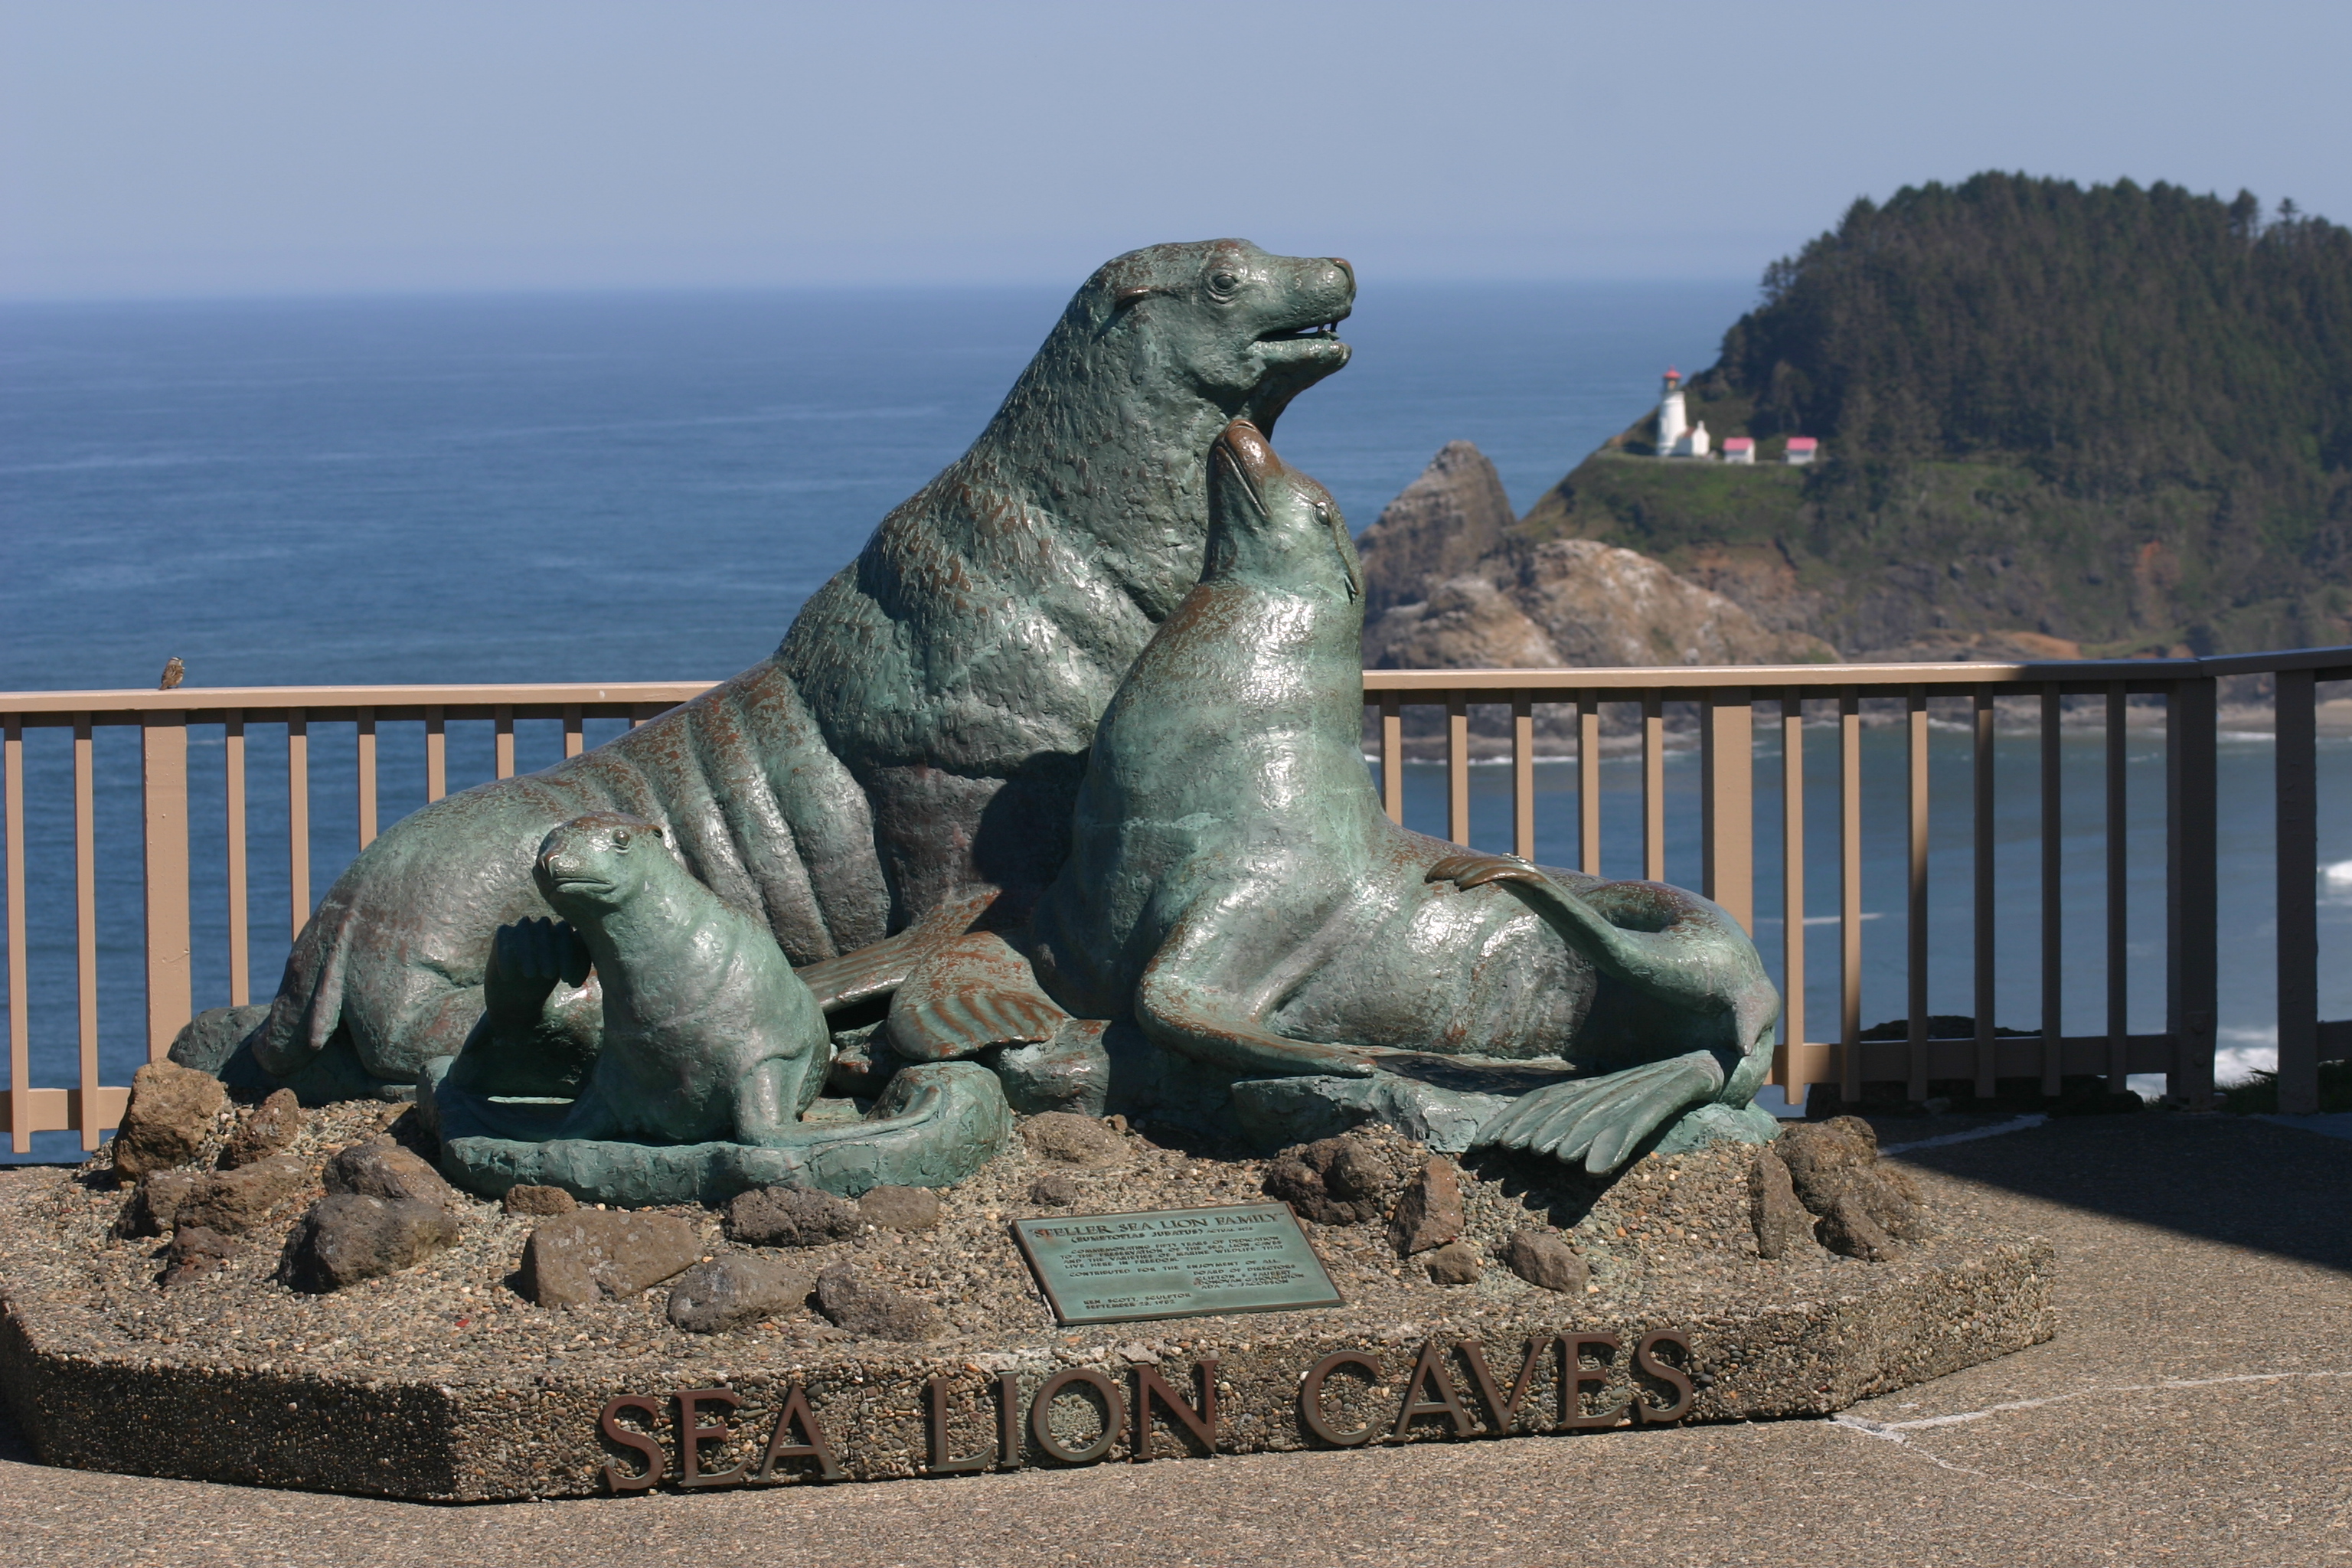 File:Sea Lions Statue.JPG - Wikimedia Commons